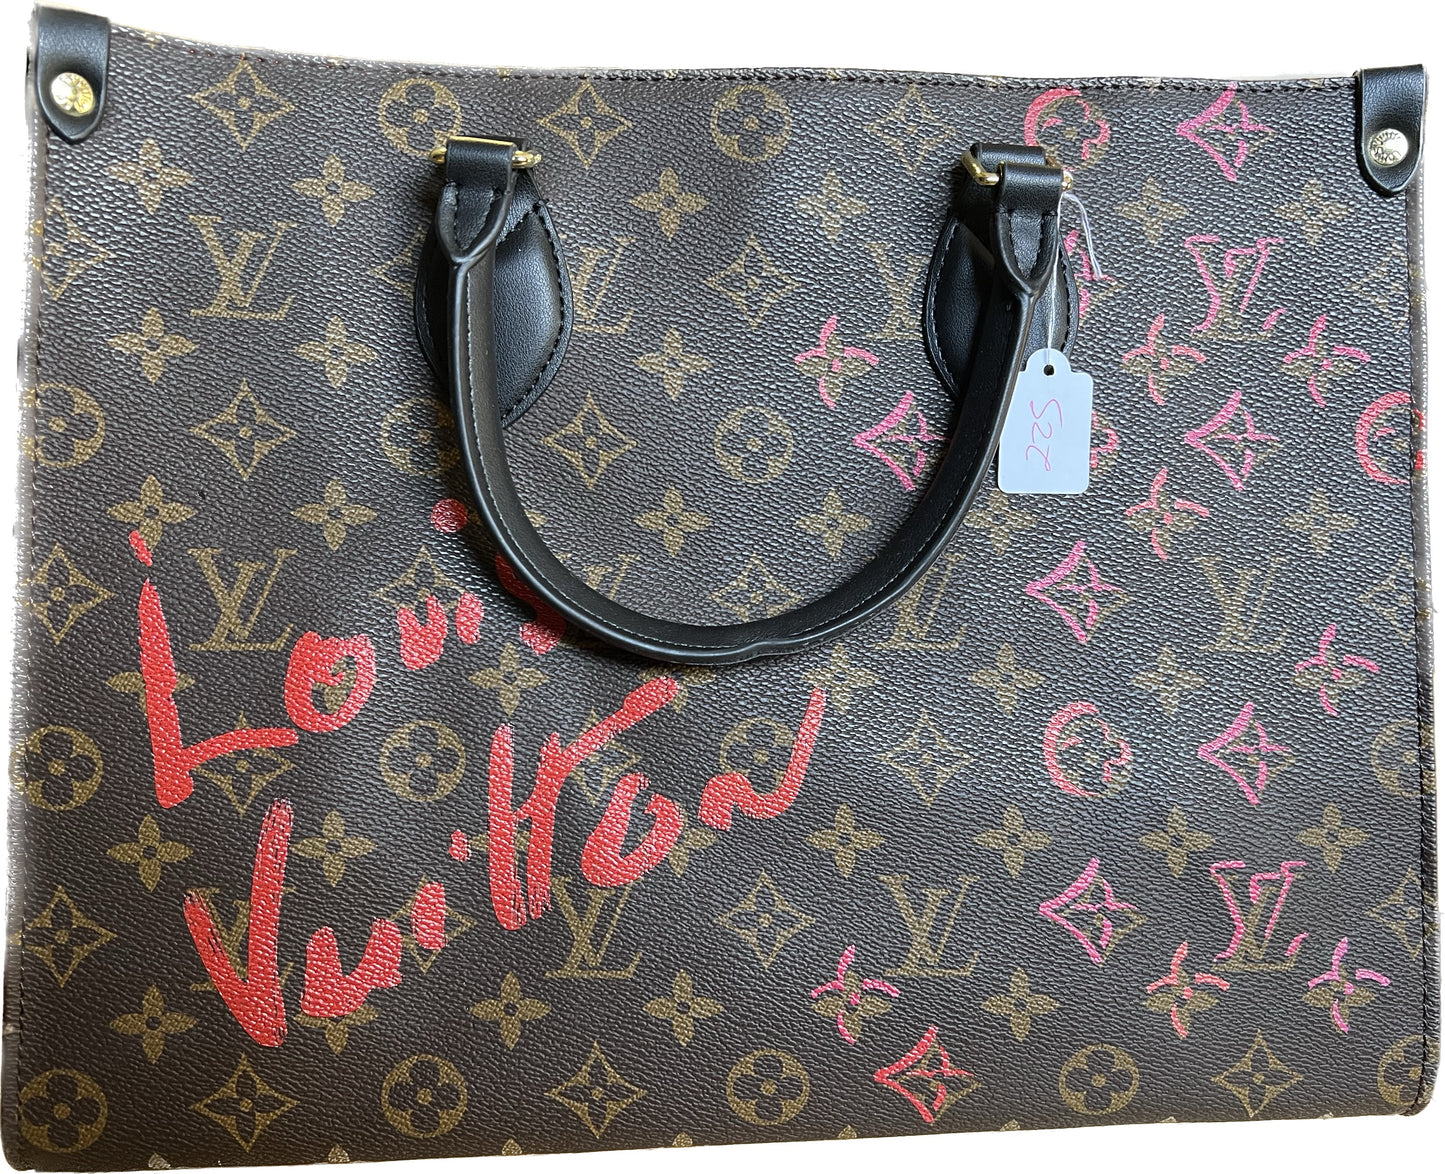 25. Louis Vuitton Red Writing- $225